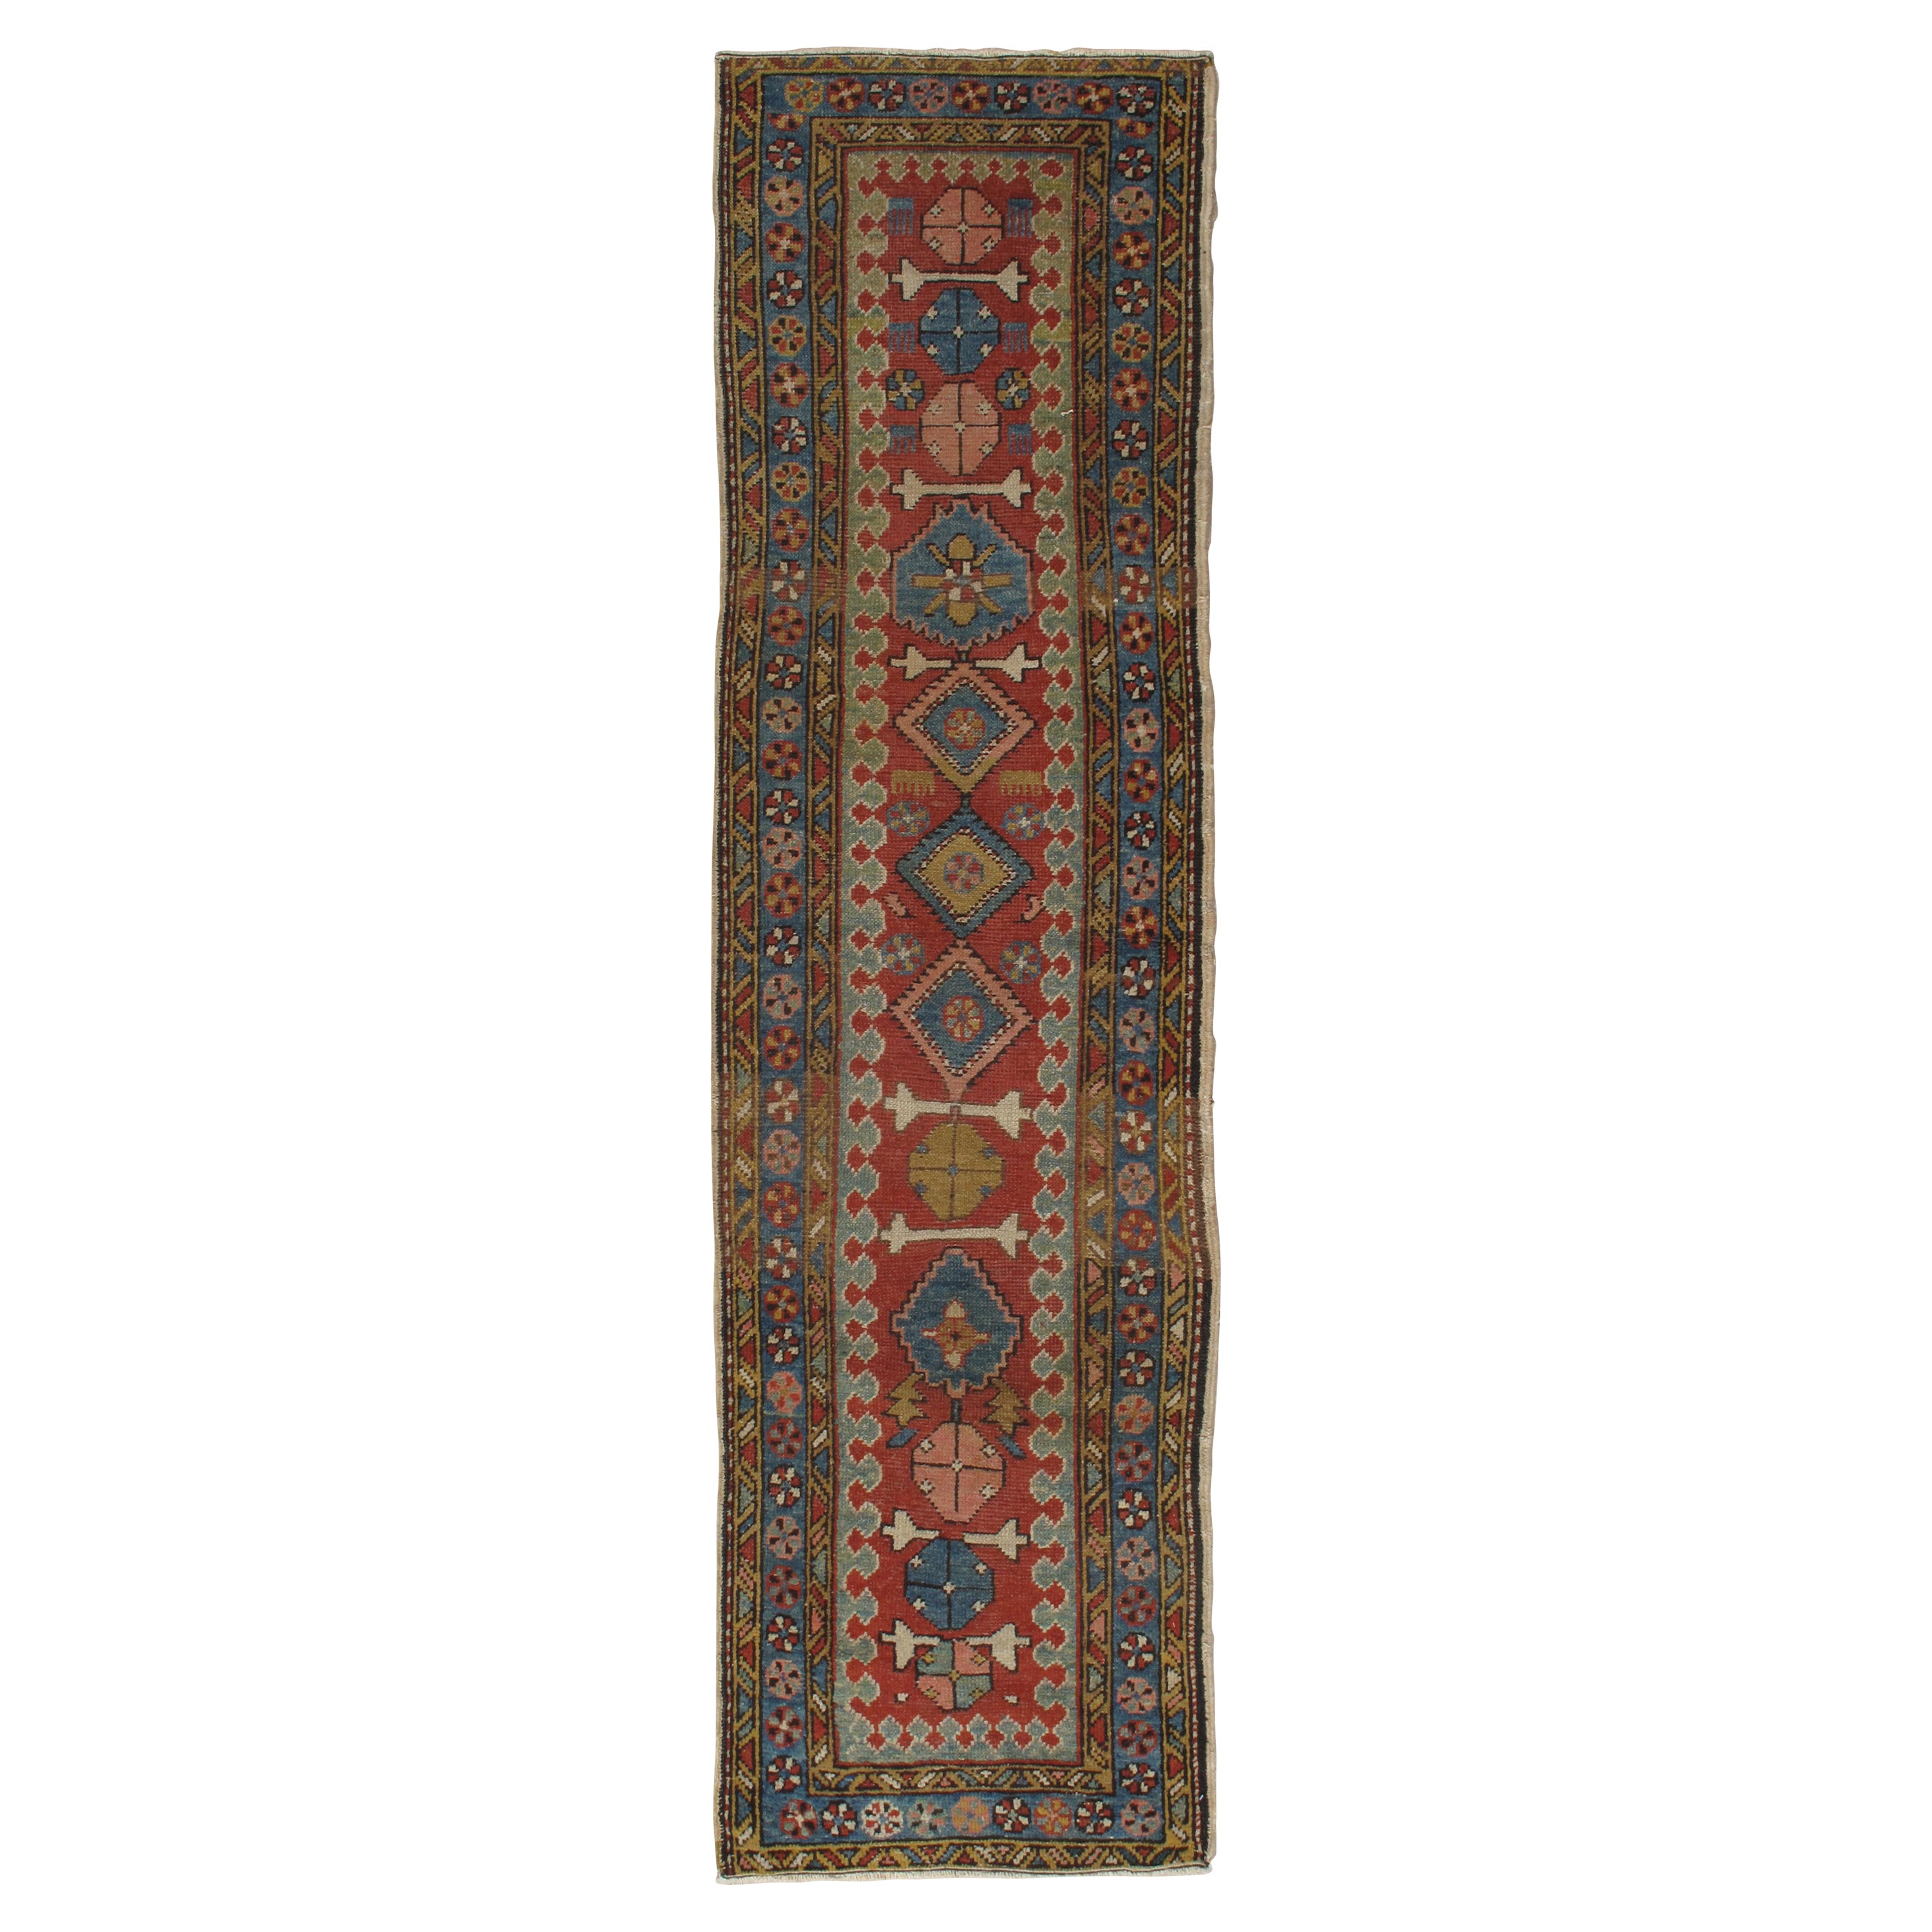 Antique Persian Heriz Runner, Handmade Wool Rug, Rust, Light Blue Green